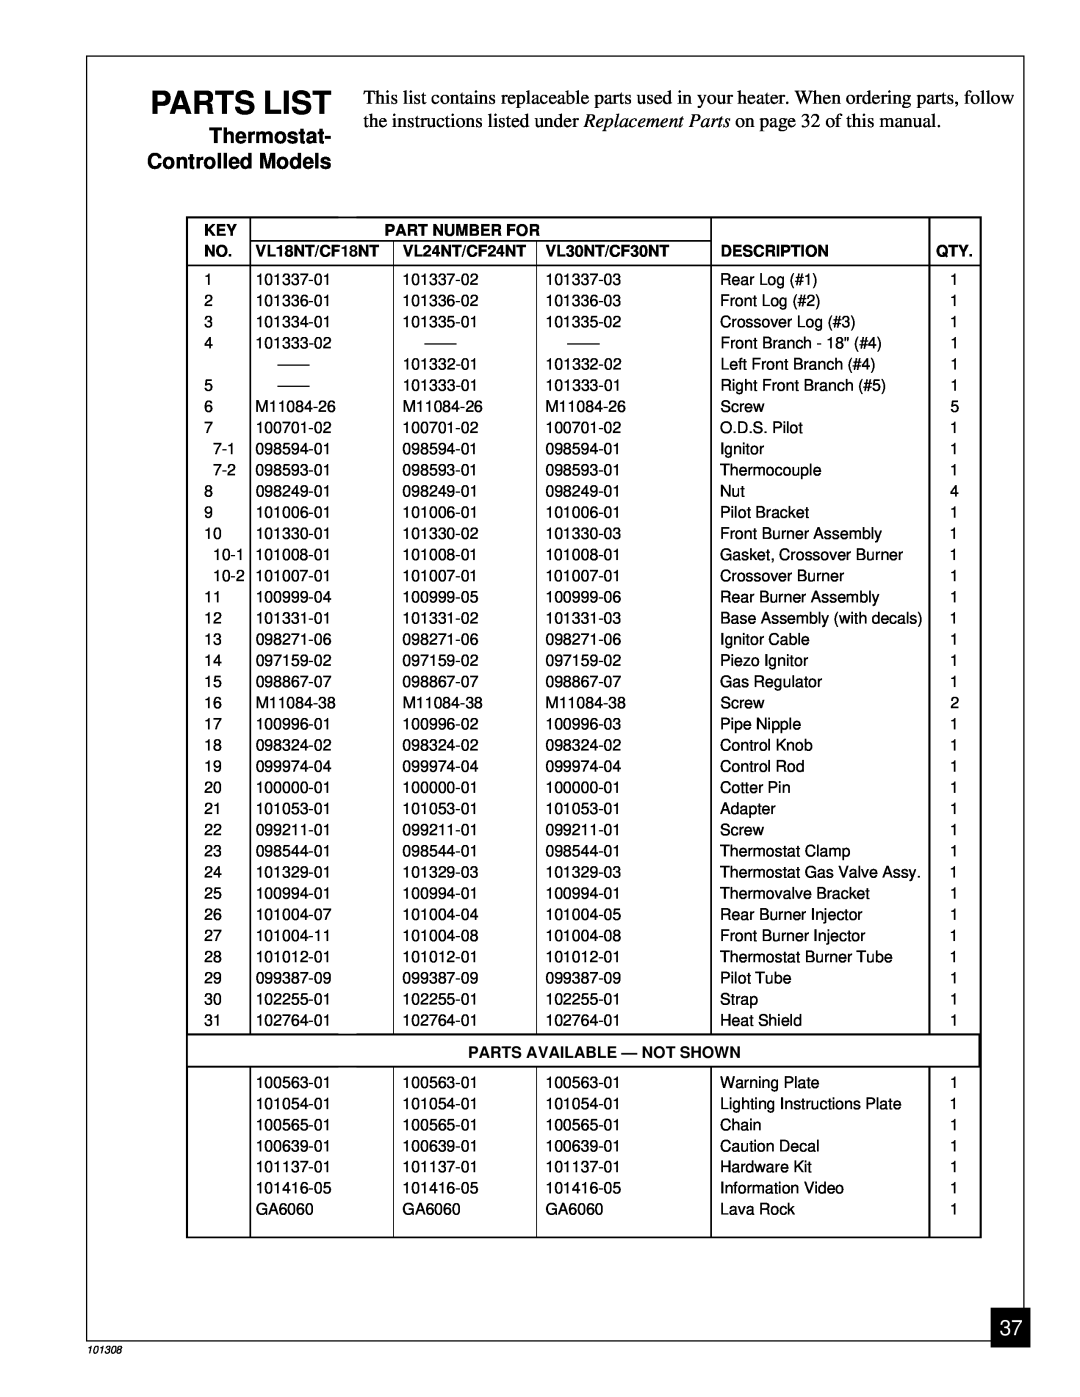 Desa NATURAL GAS LOG HEATER Parts List, Part Number For, VL18NT/CF18NT, VL24NT/CF24NT, VL30NT/CF30NT, Description 